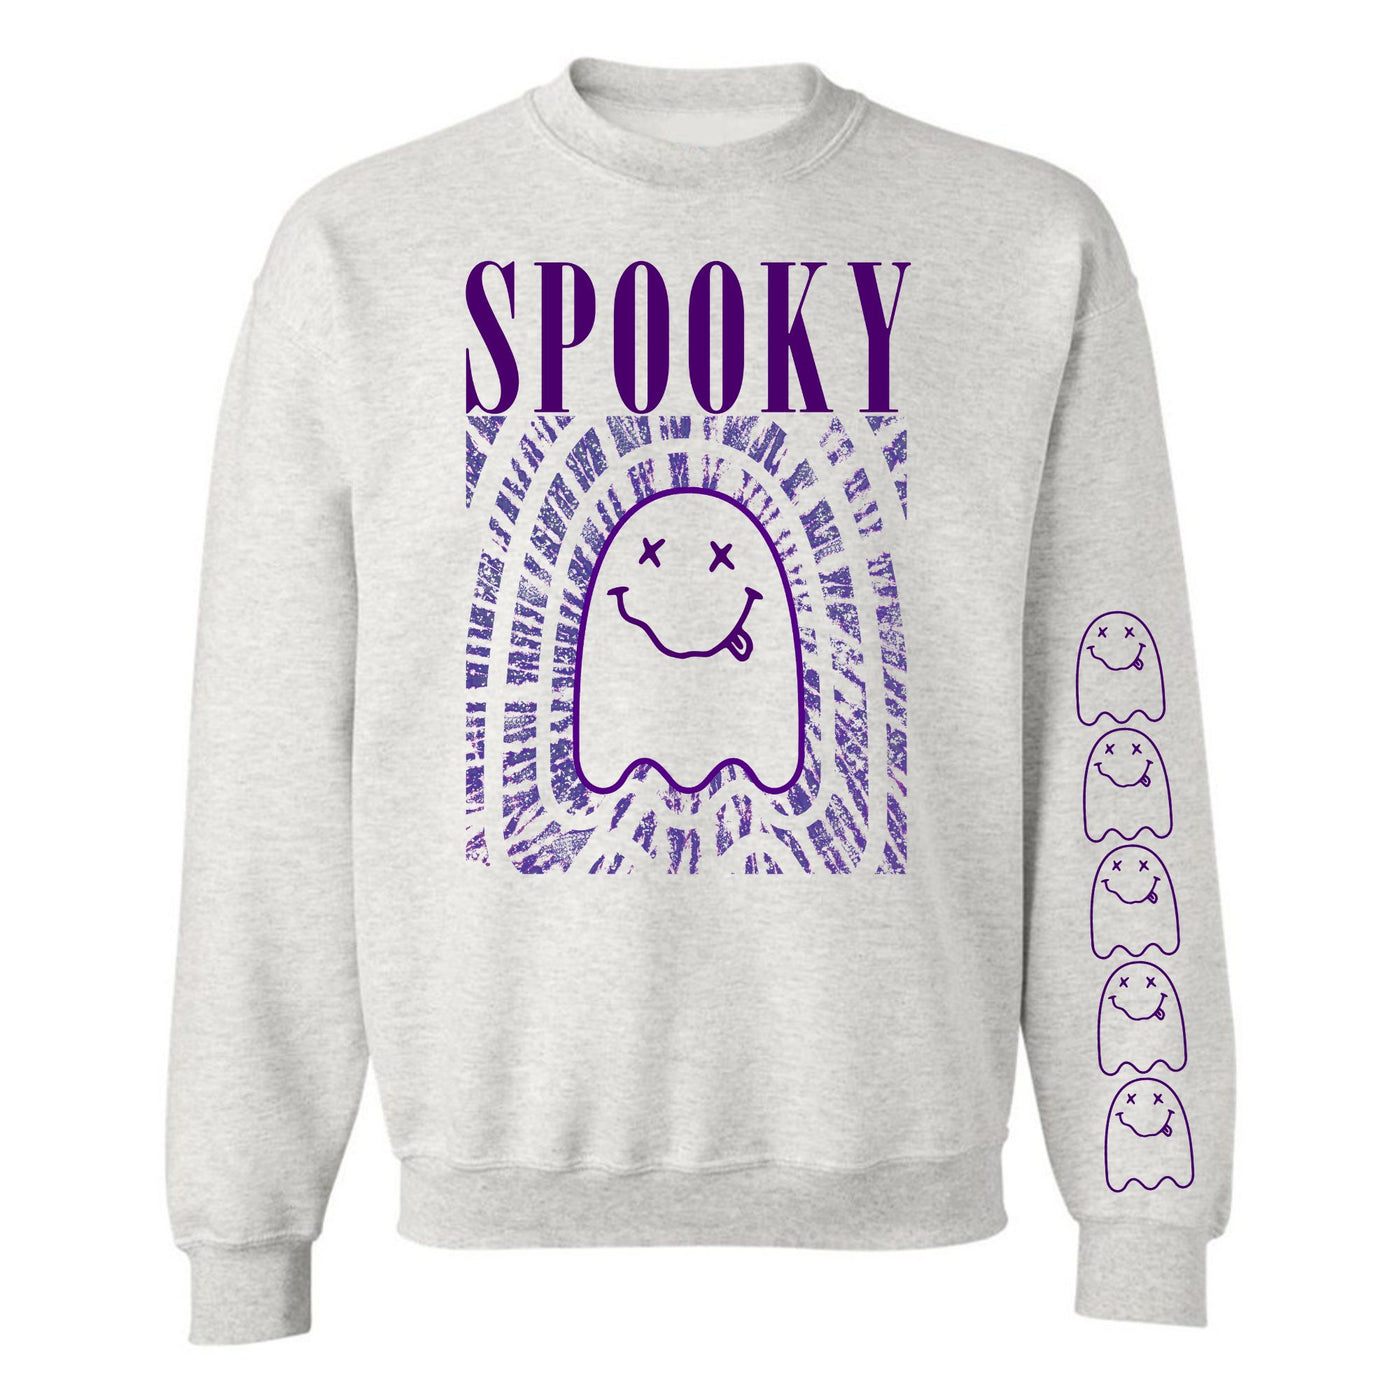 'Nirvana Spooky' Sweatshirt